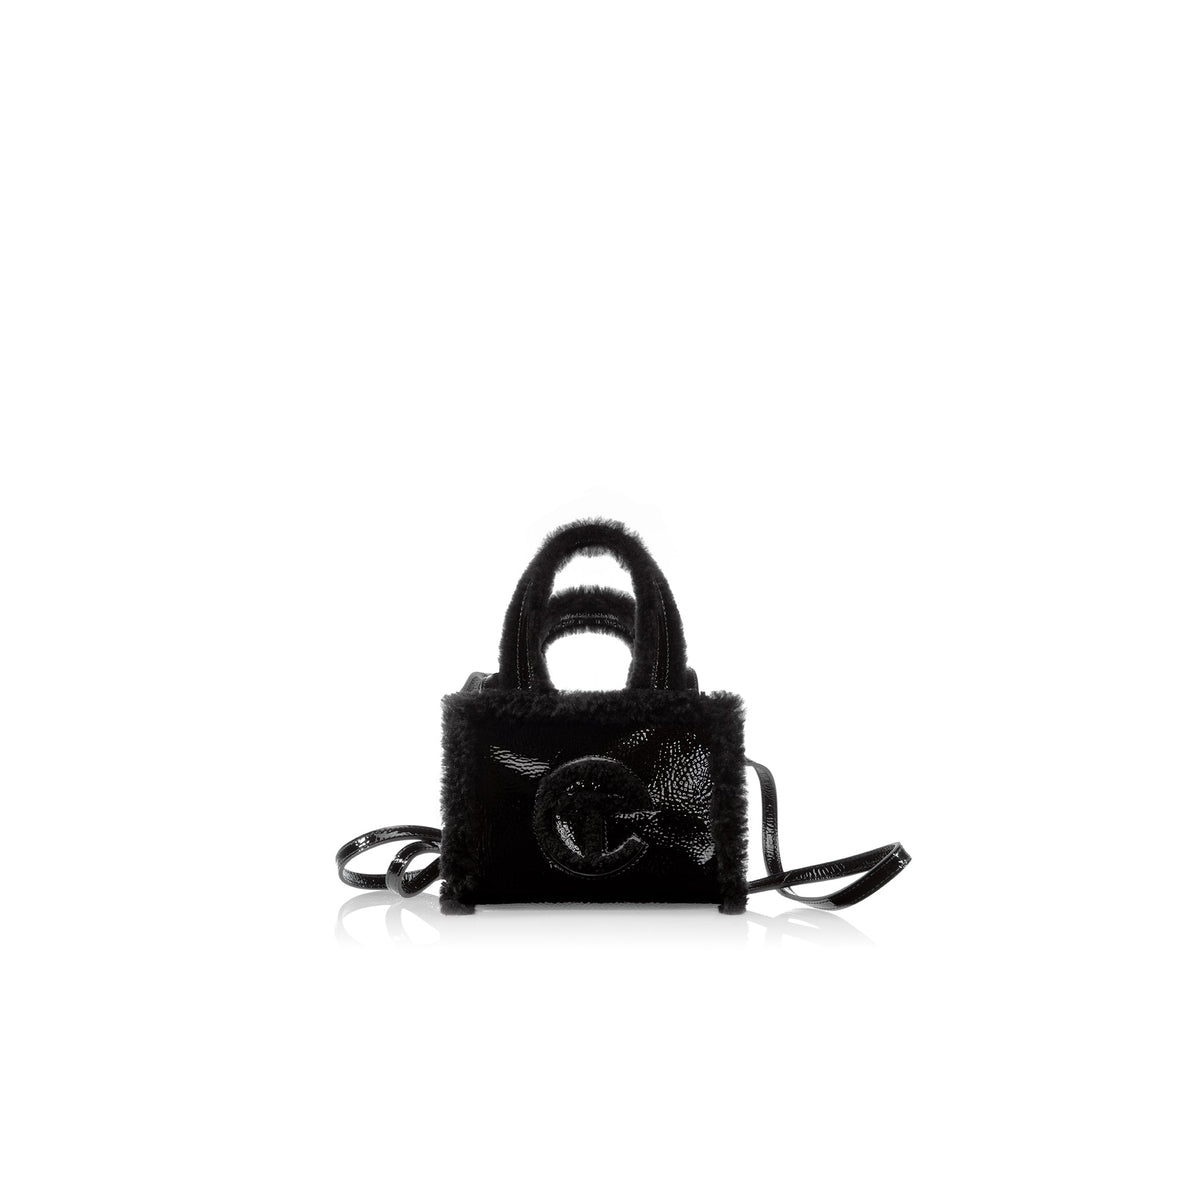 black telfar bag  Bags, Purses and bags, Bag accessories